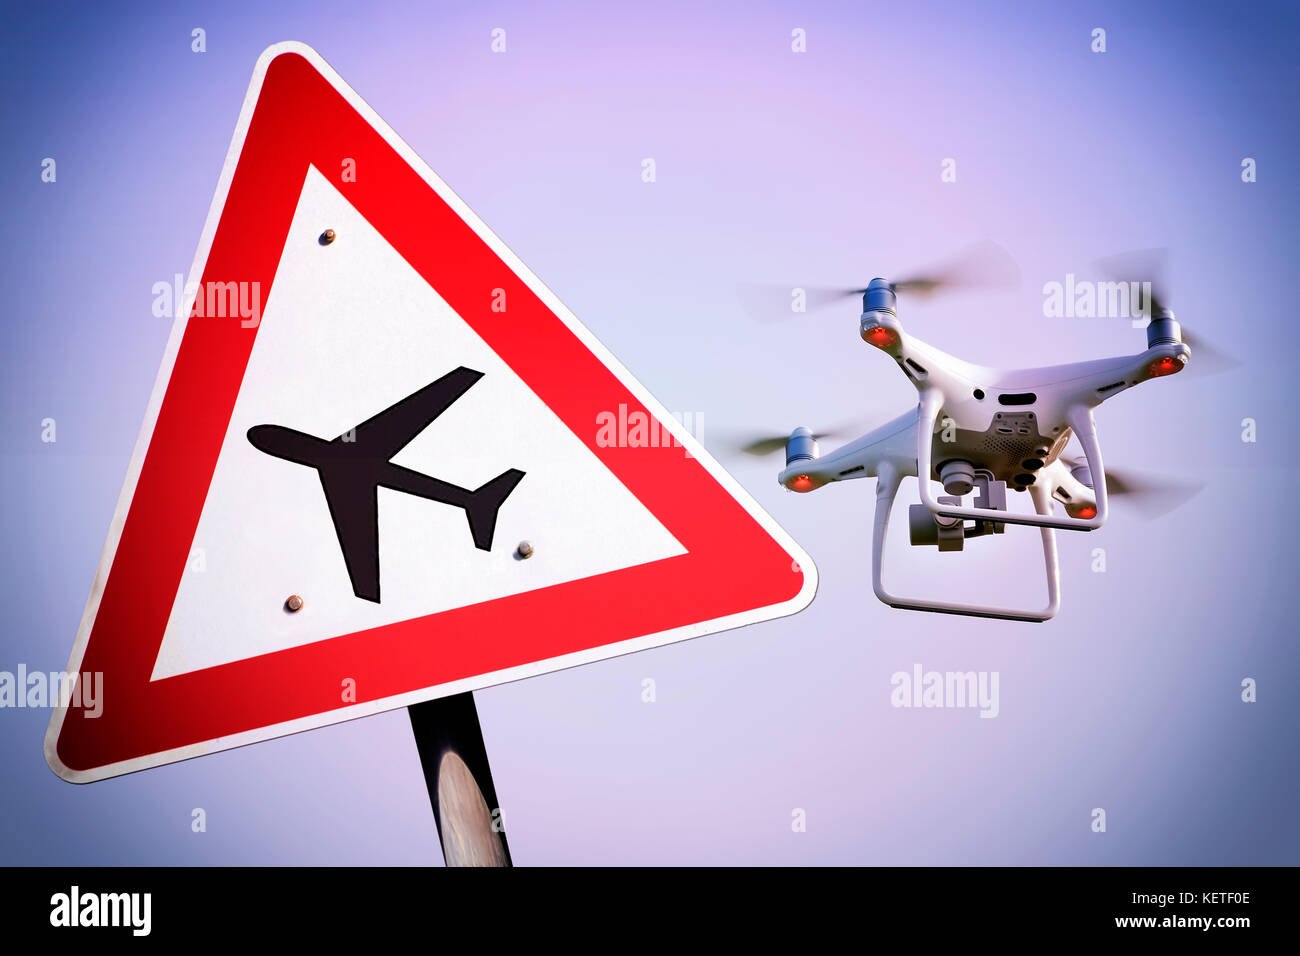 Drone en vol et de l'air traffic sign Banque D'Images